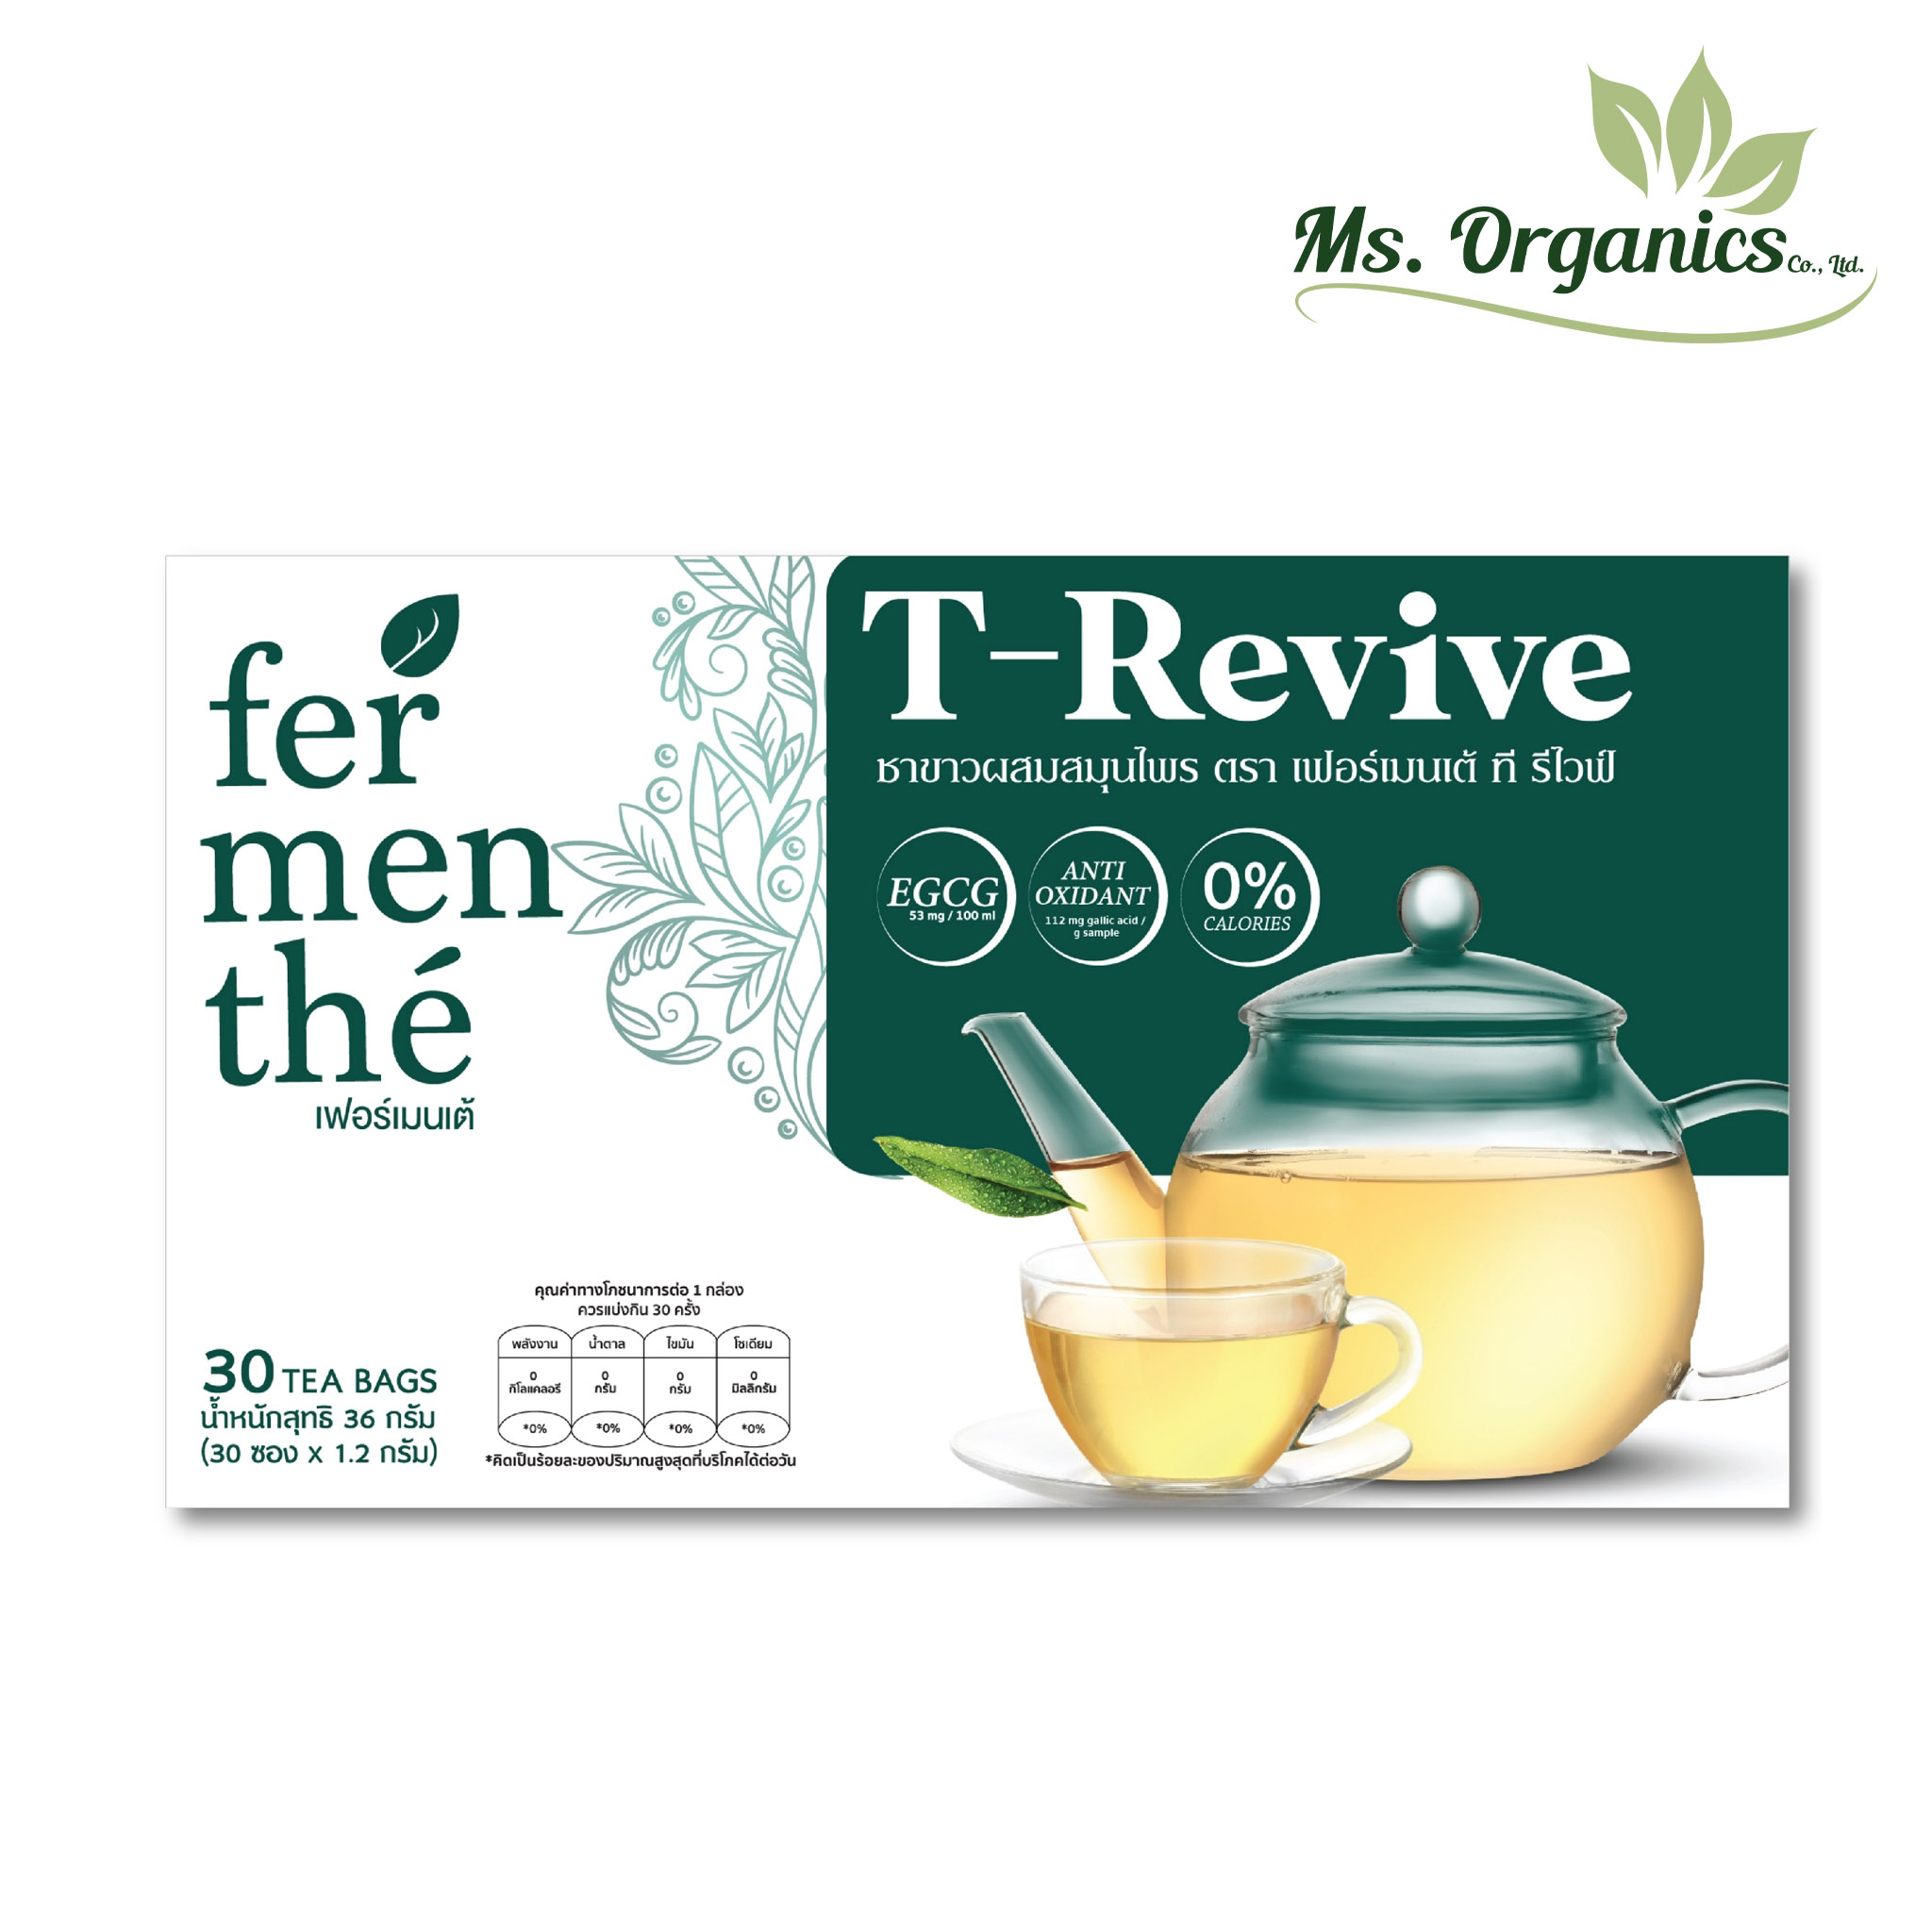 Fermenthé  T-Revive 8 Beneficial Thai Herbs